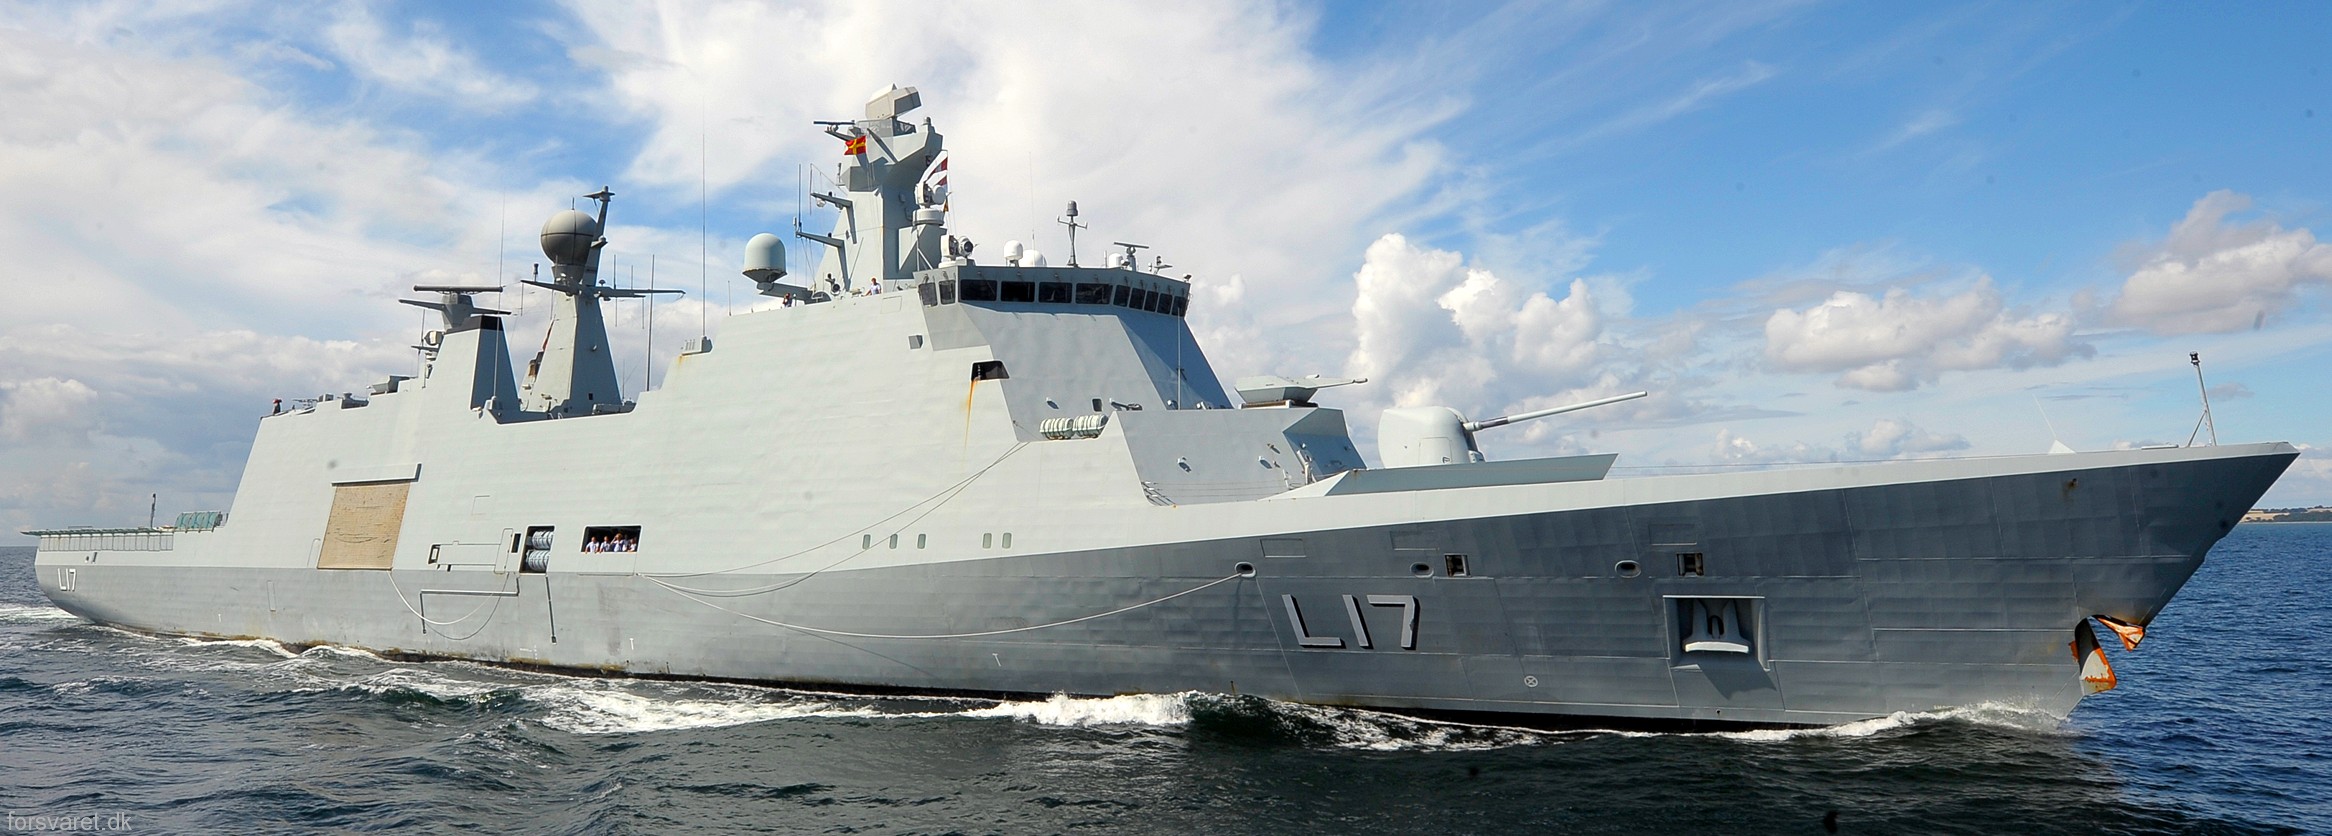 f-342 hdms esbern snare l-17 frigate command support ship royal danish navy 35